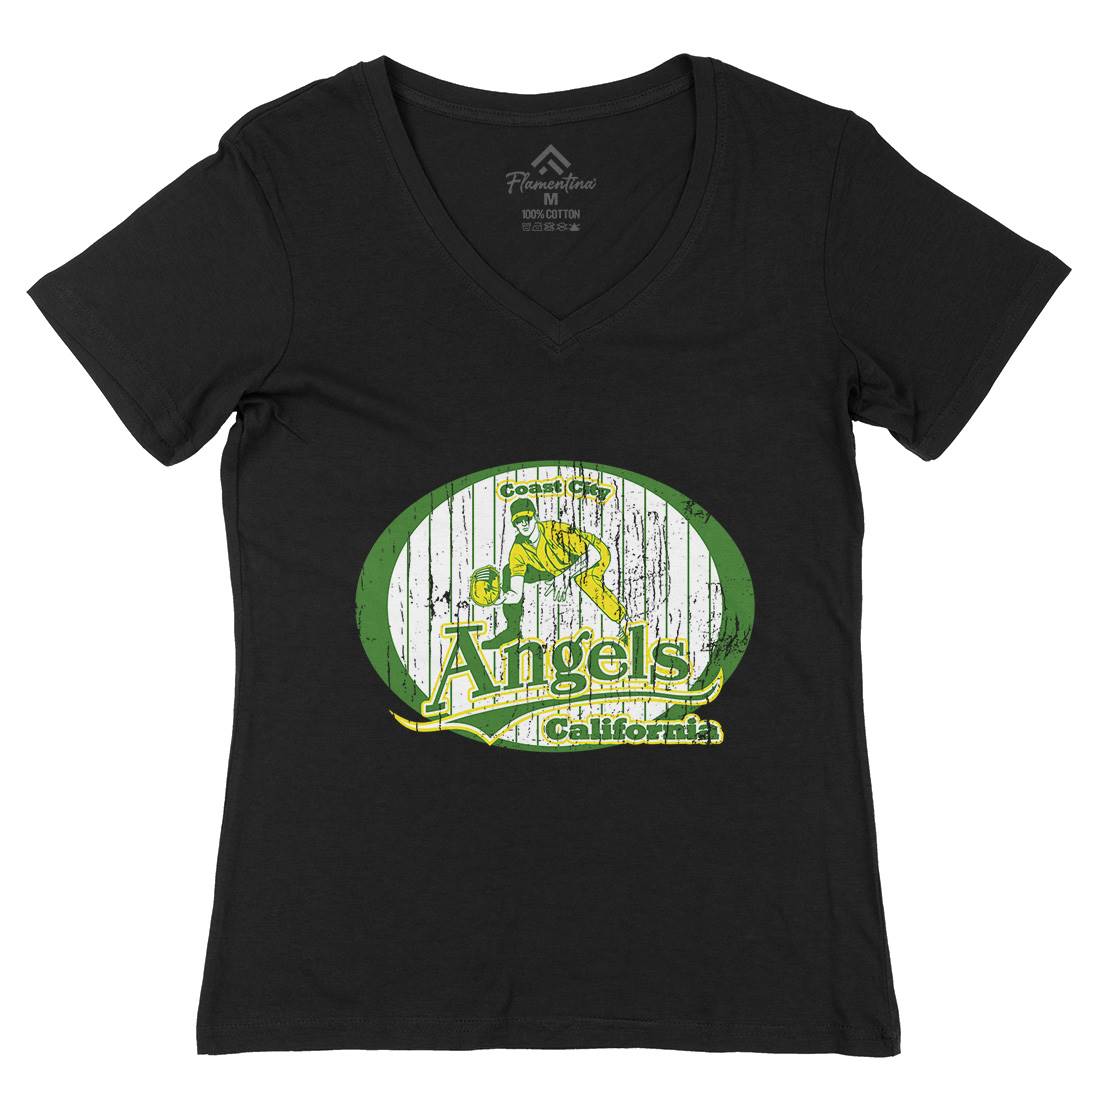 Coast City Angels Womens Organic V-Neck T-Shirt Sport D129